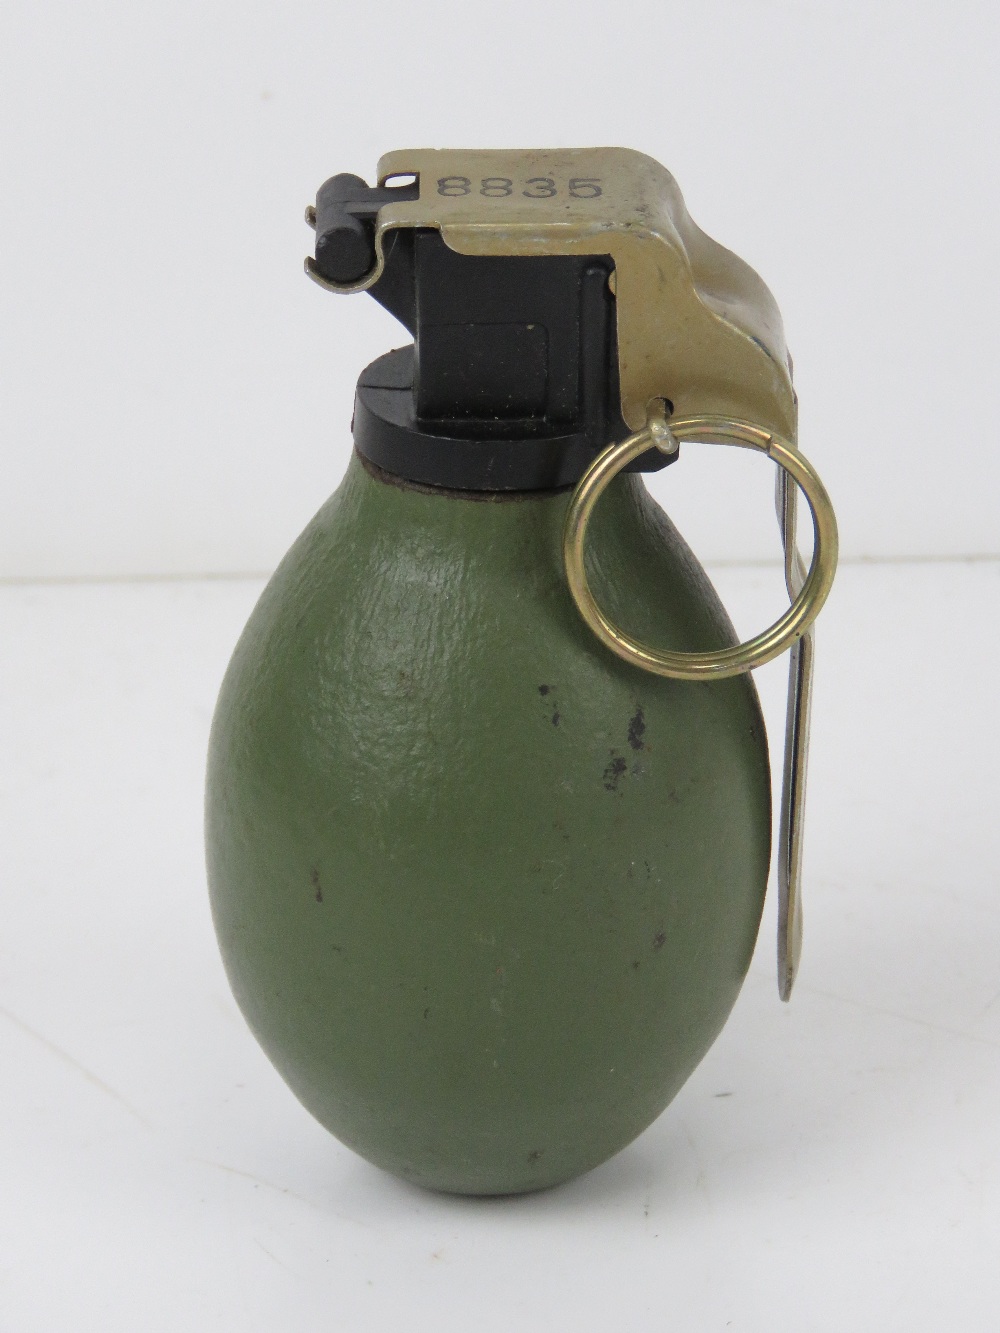 An inert Yugoslavian M52 hand grenade. - Image 2 of 3